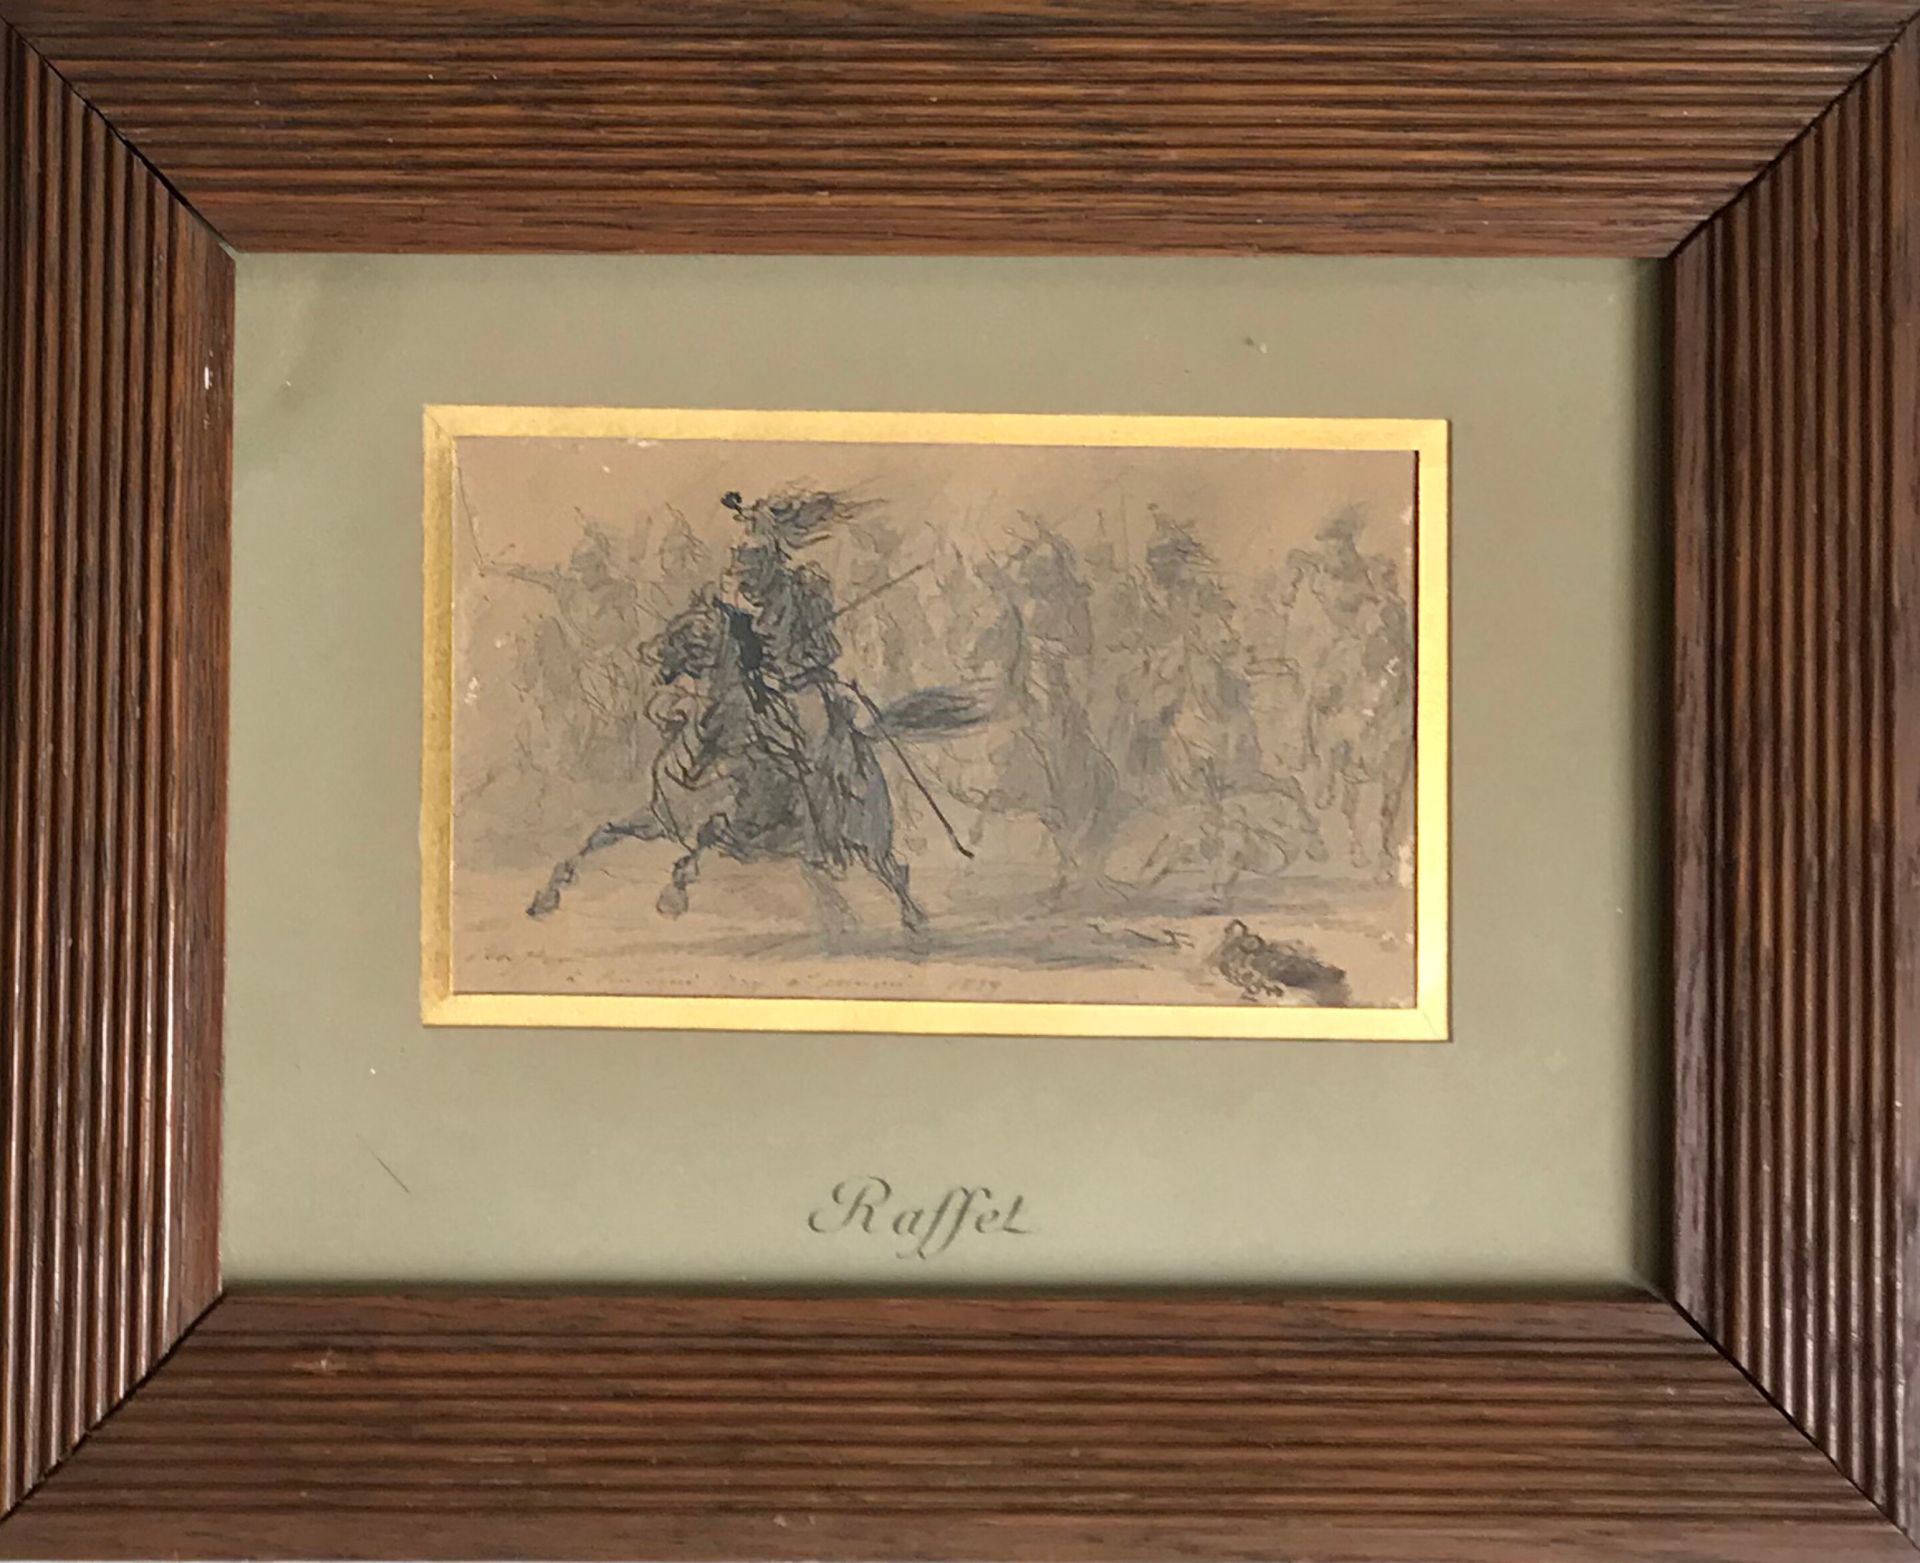 Null 奥古斯特-拉费特 (1804-1860)

轻骑兵的冲锋

水墨，铅笔，棕色纸

左下角有签名，献给我的朋友BRY - 1859年1月

背面：187&hellip;